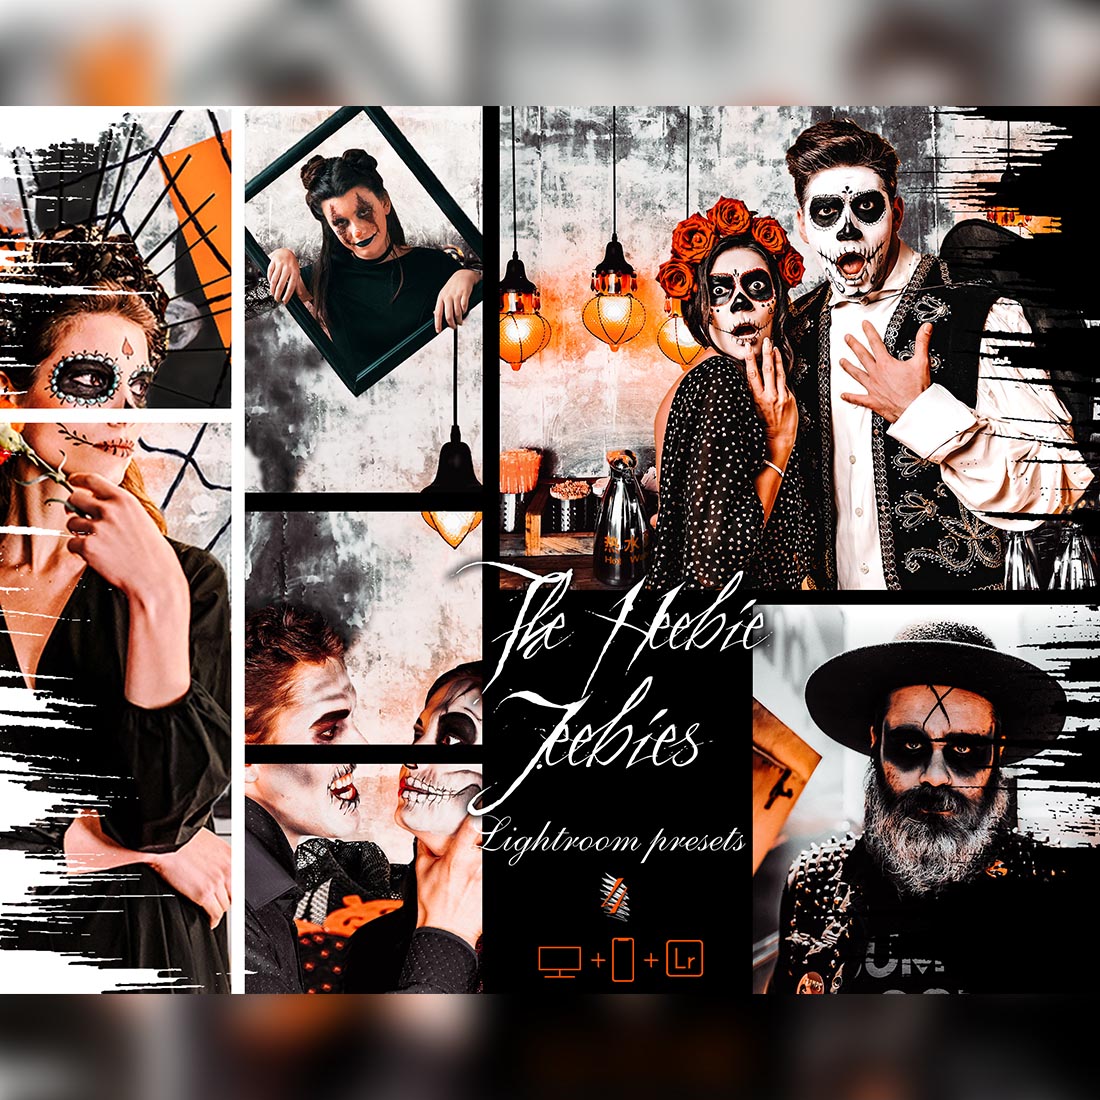 12 The Heebie-Jeebies Lightroom Presets, Halloween Mobile Preset, Horror Orange Desktop, Lifestyle Portrait Theme Instagram LR Filter DNG cover image.